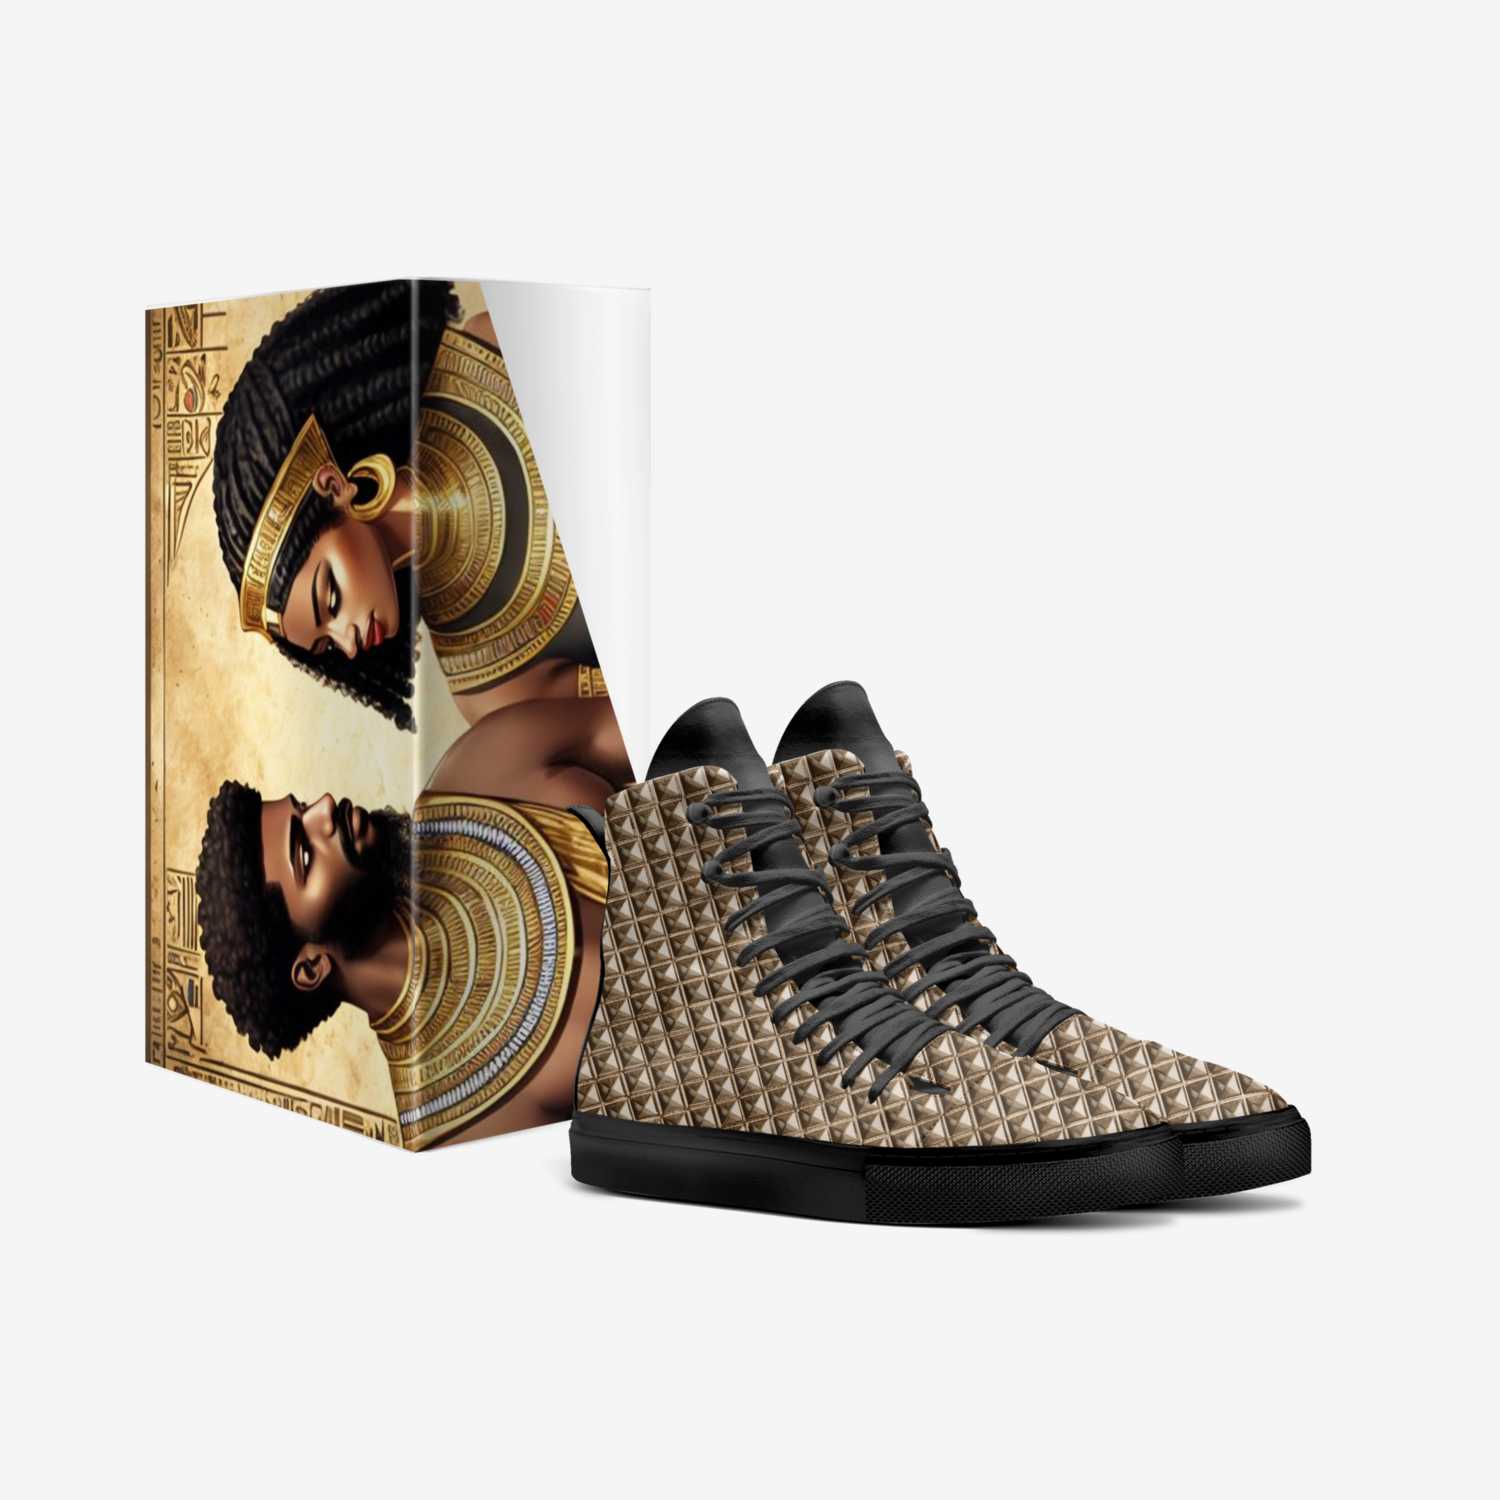 Royal Kingdom custom made in Italy shoes by Rauh Karim | Box view